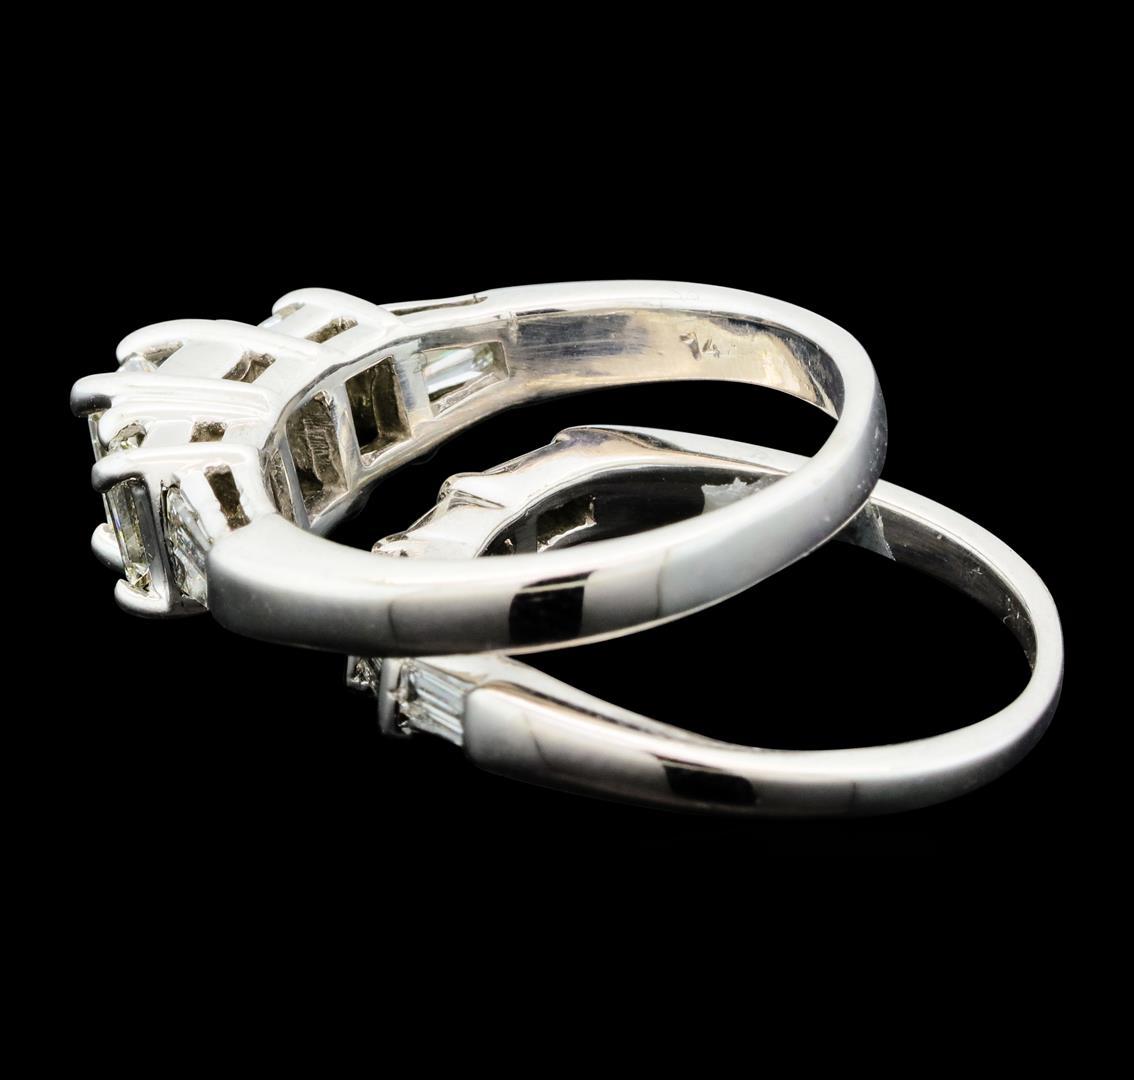 1.14 ctw Diamond Ring & Wedding Band - 14KT White Gold